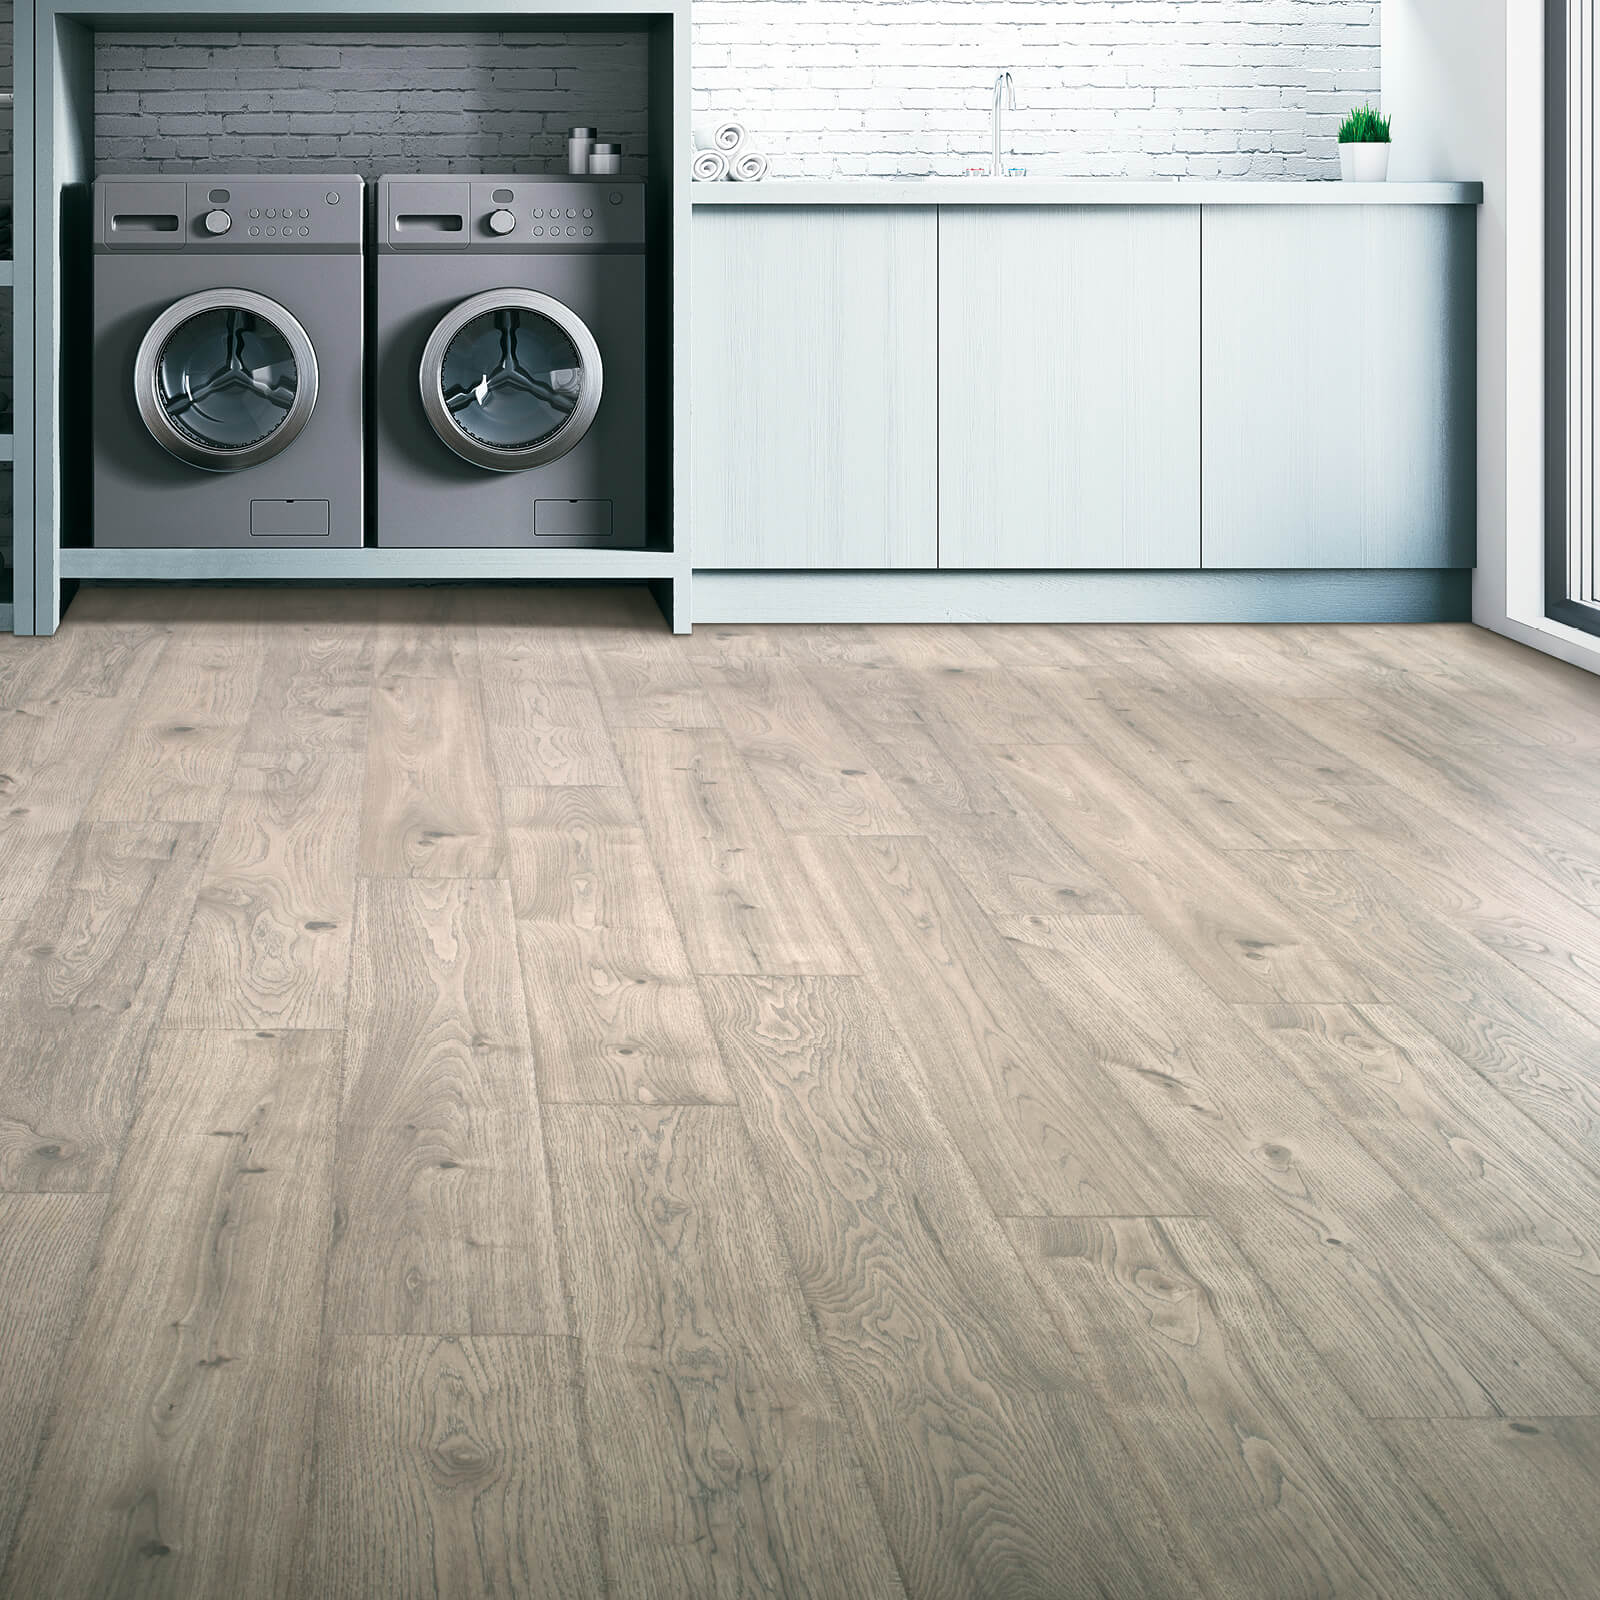 Laundry room Laminate flooring | Star Flooring & Design